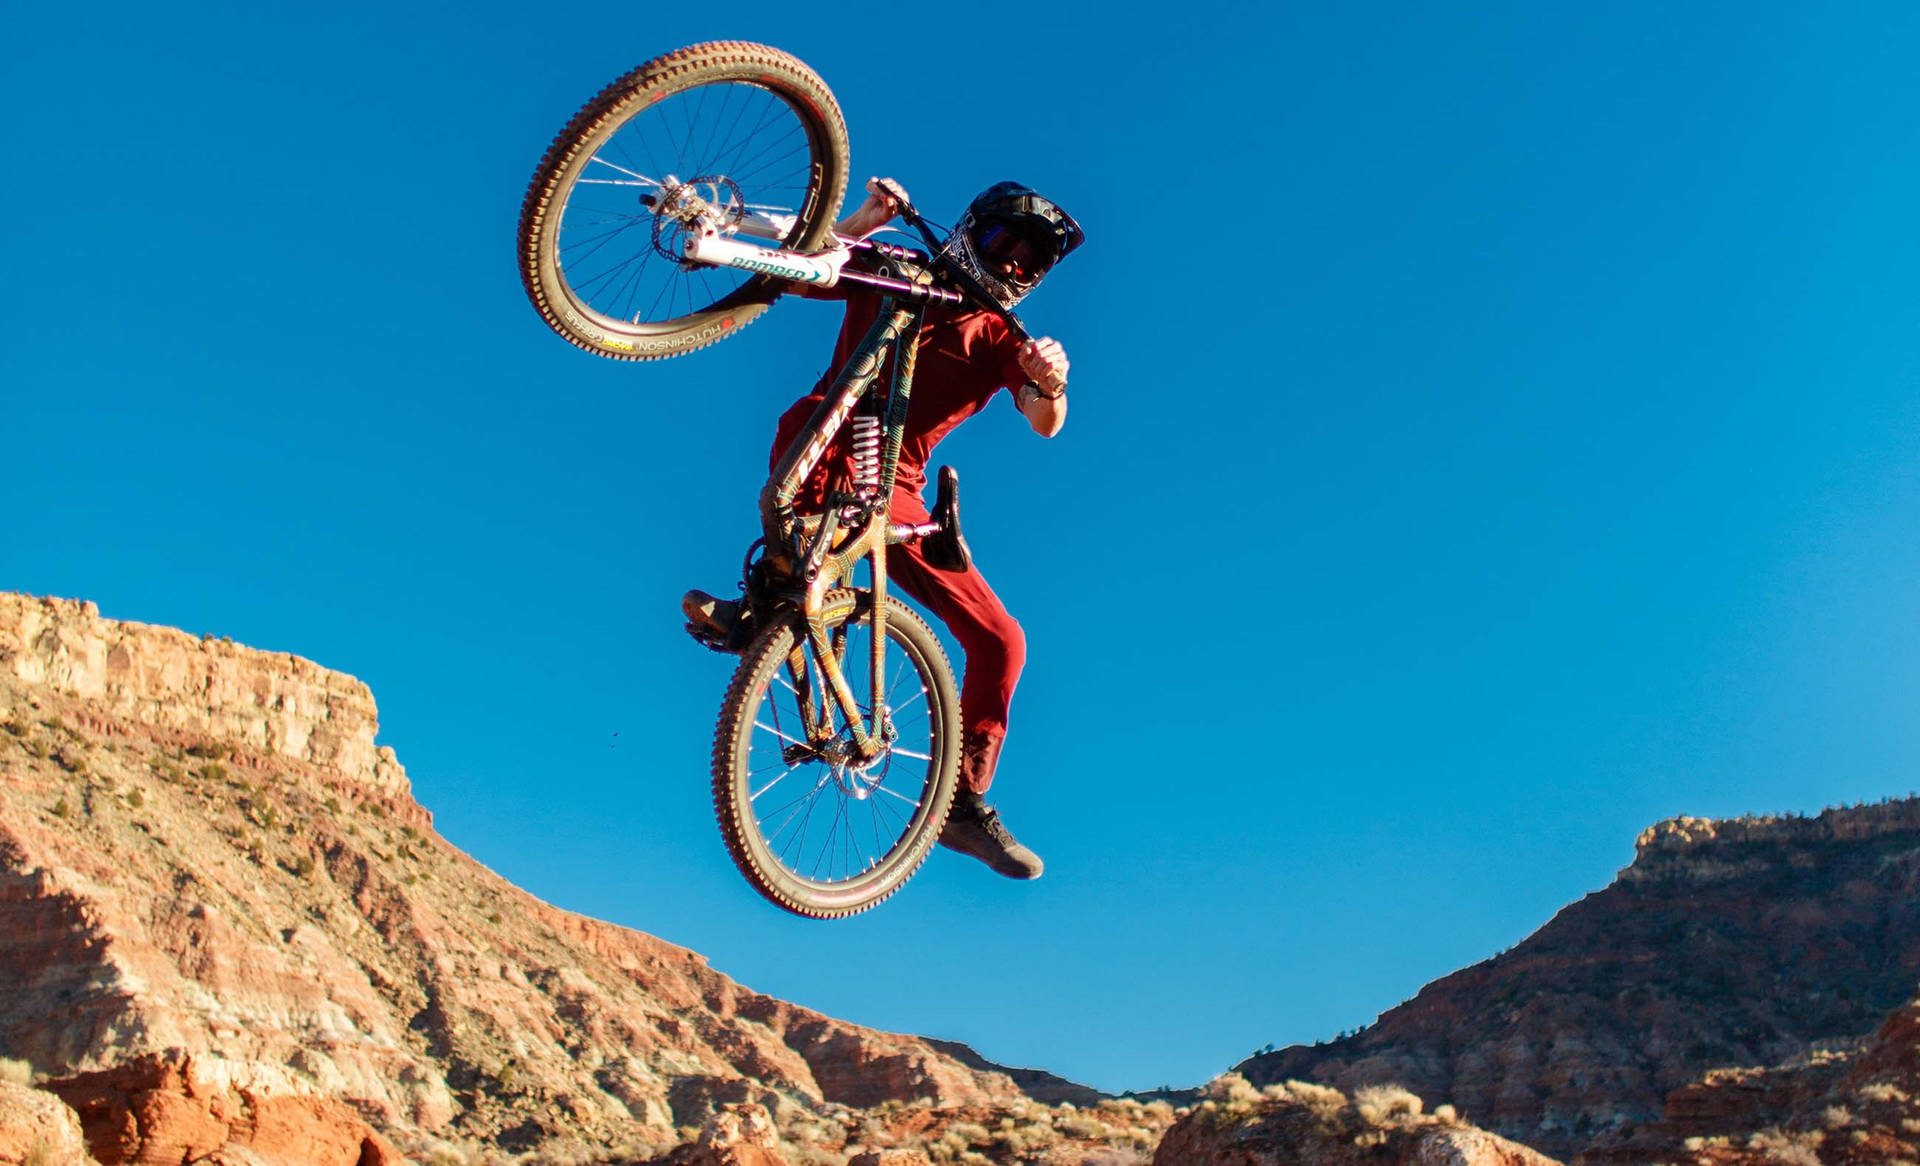 Download Cool Loose 4k Mountain Bike Trick Wallpaper 